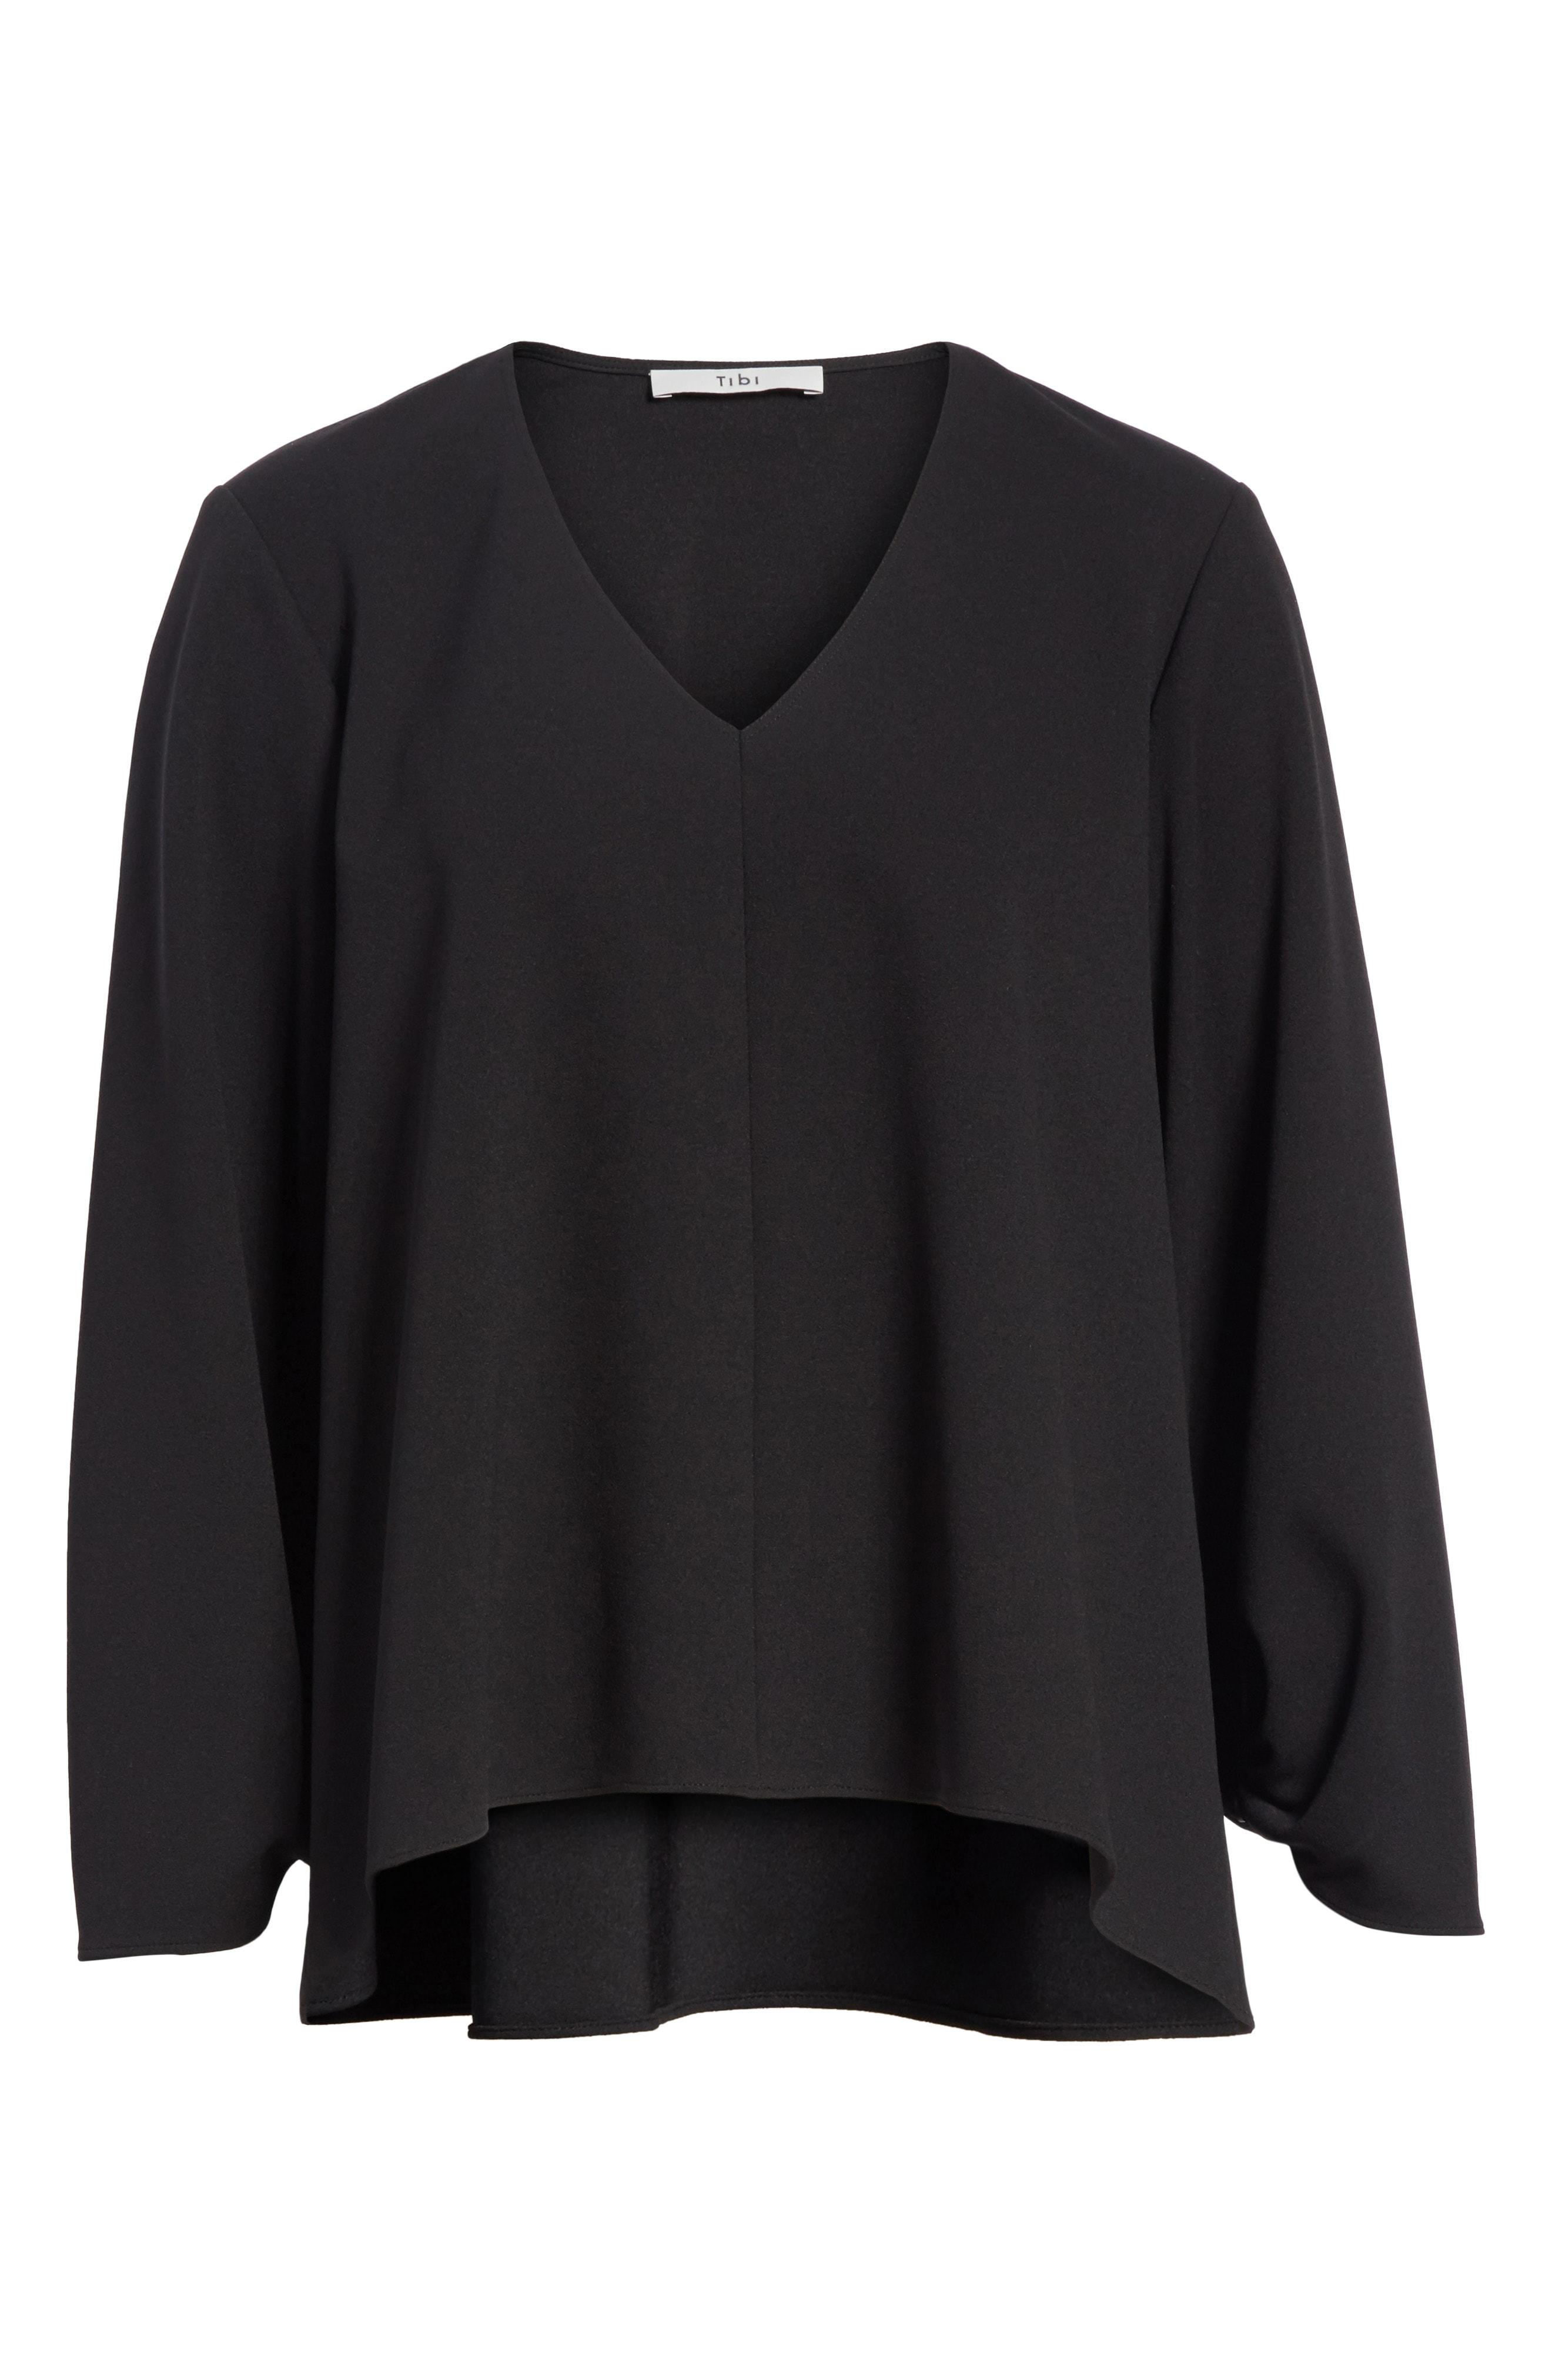 Tibi Cinched Sleeve Top In Black | ModeSens